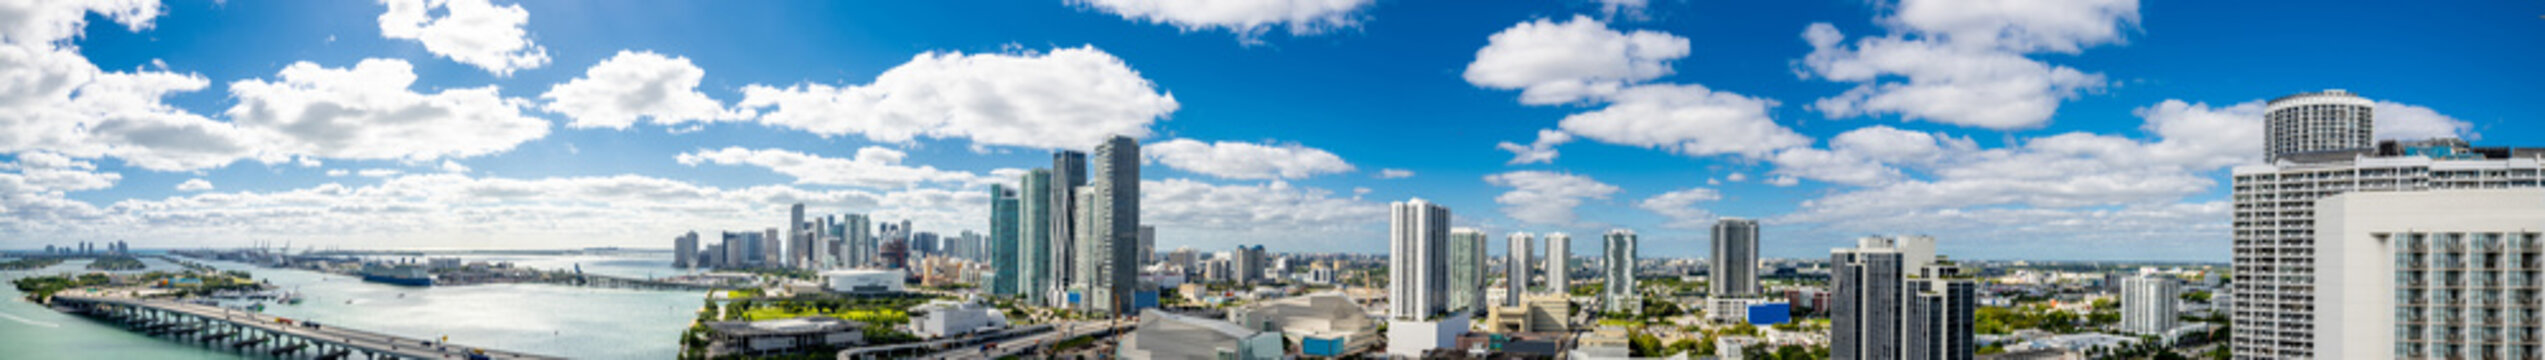 Aerial landscape panorama Miami Beach Downtown cityscape skyline